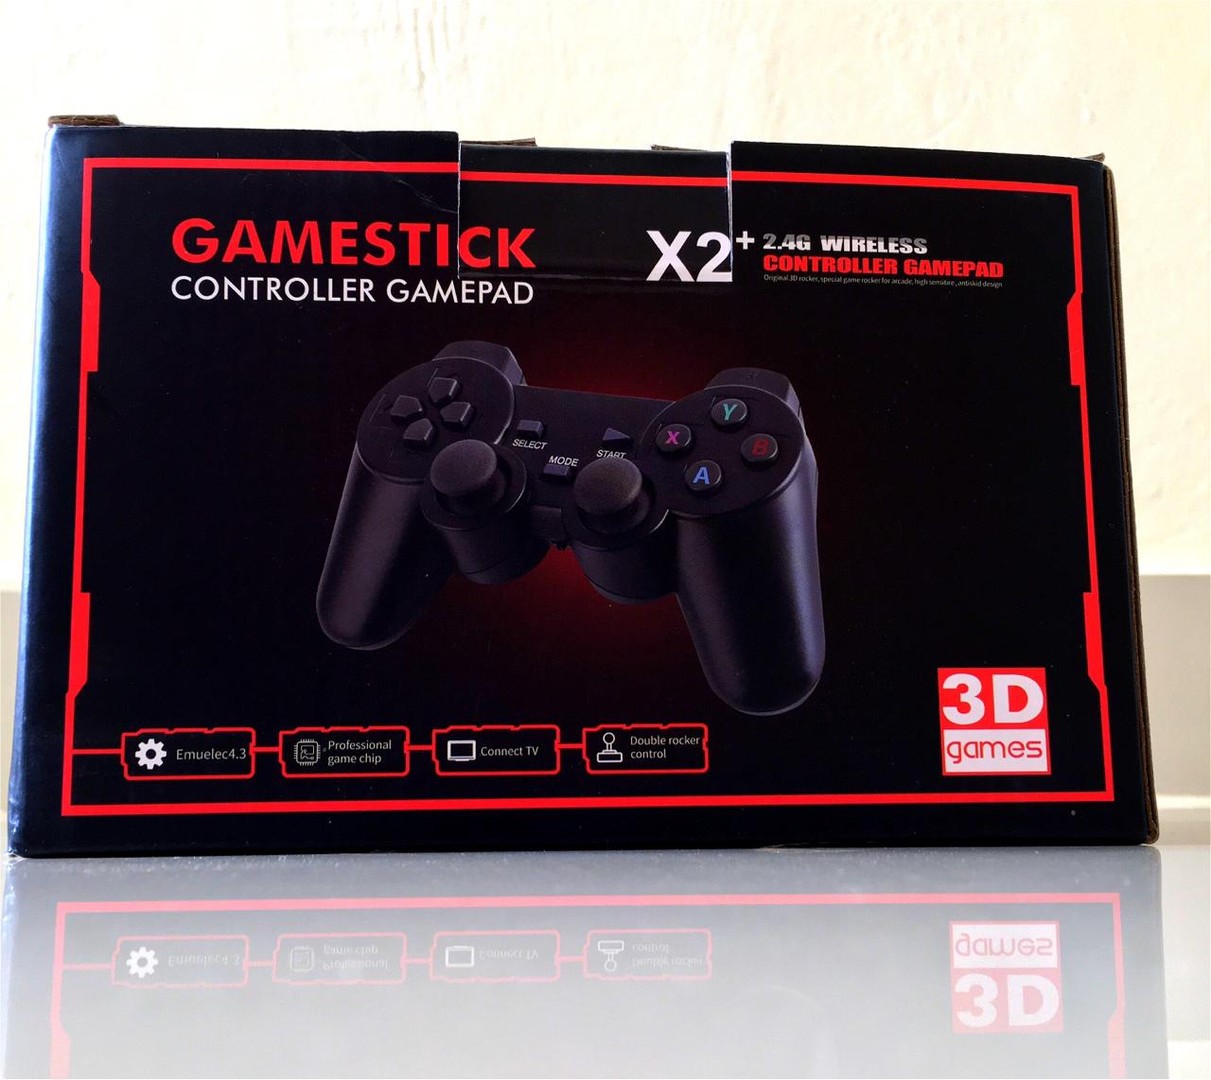 consolas y videojuegos - GameStick Controller Gamepad + 2.4G Wireless! 